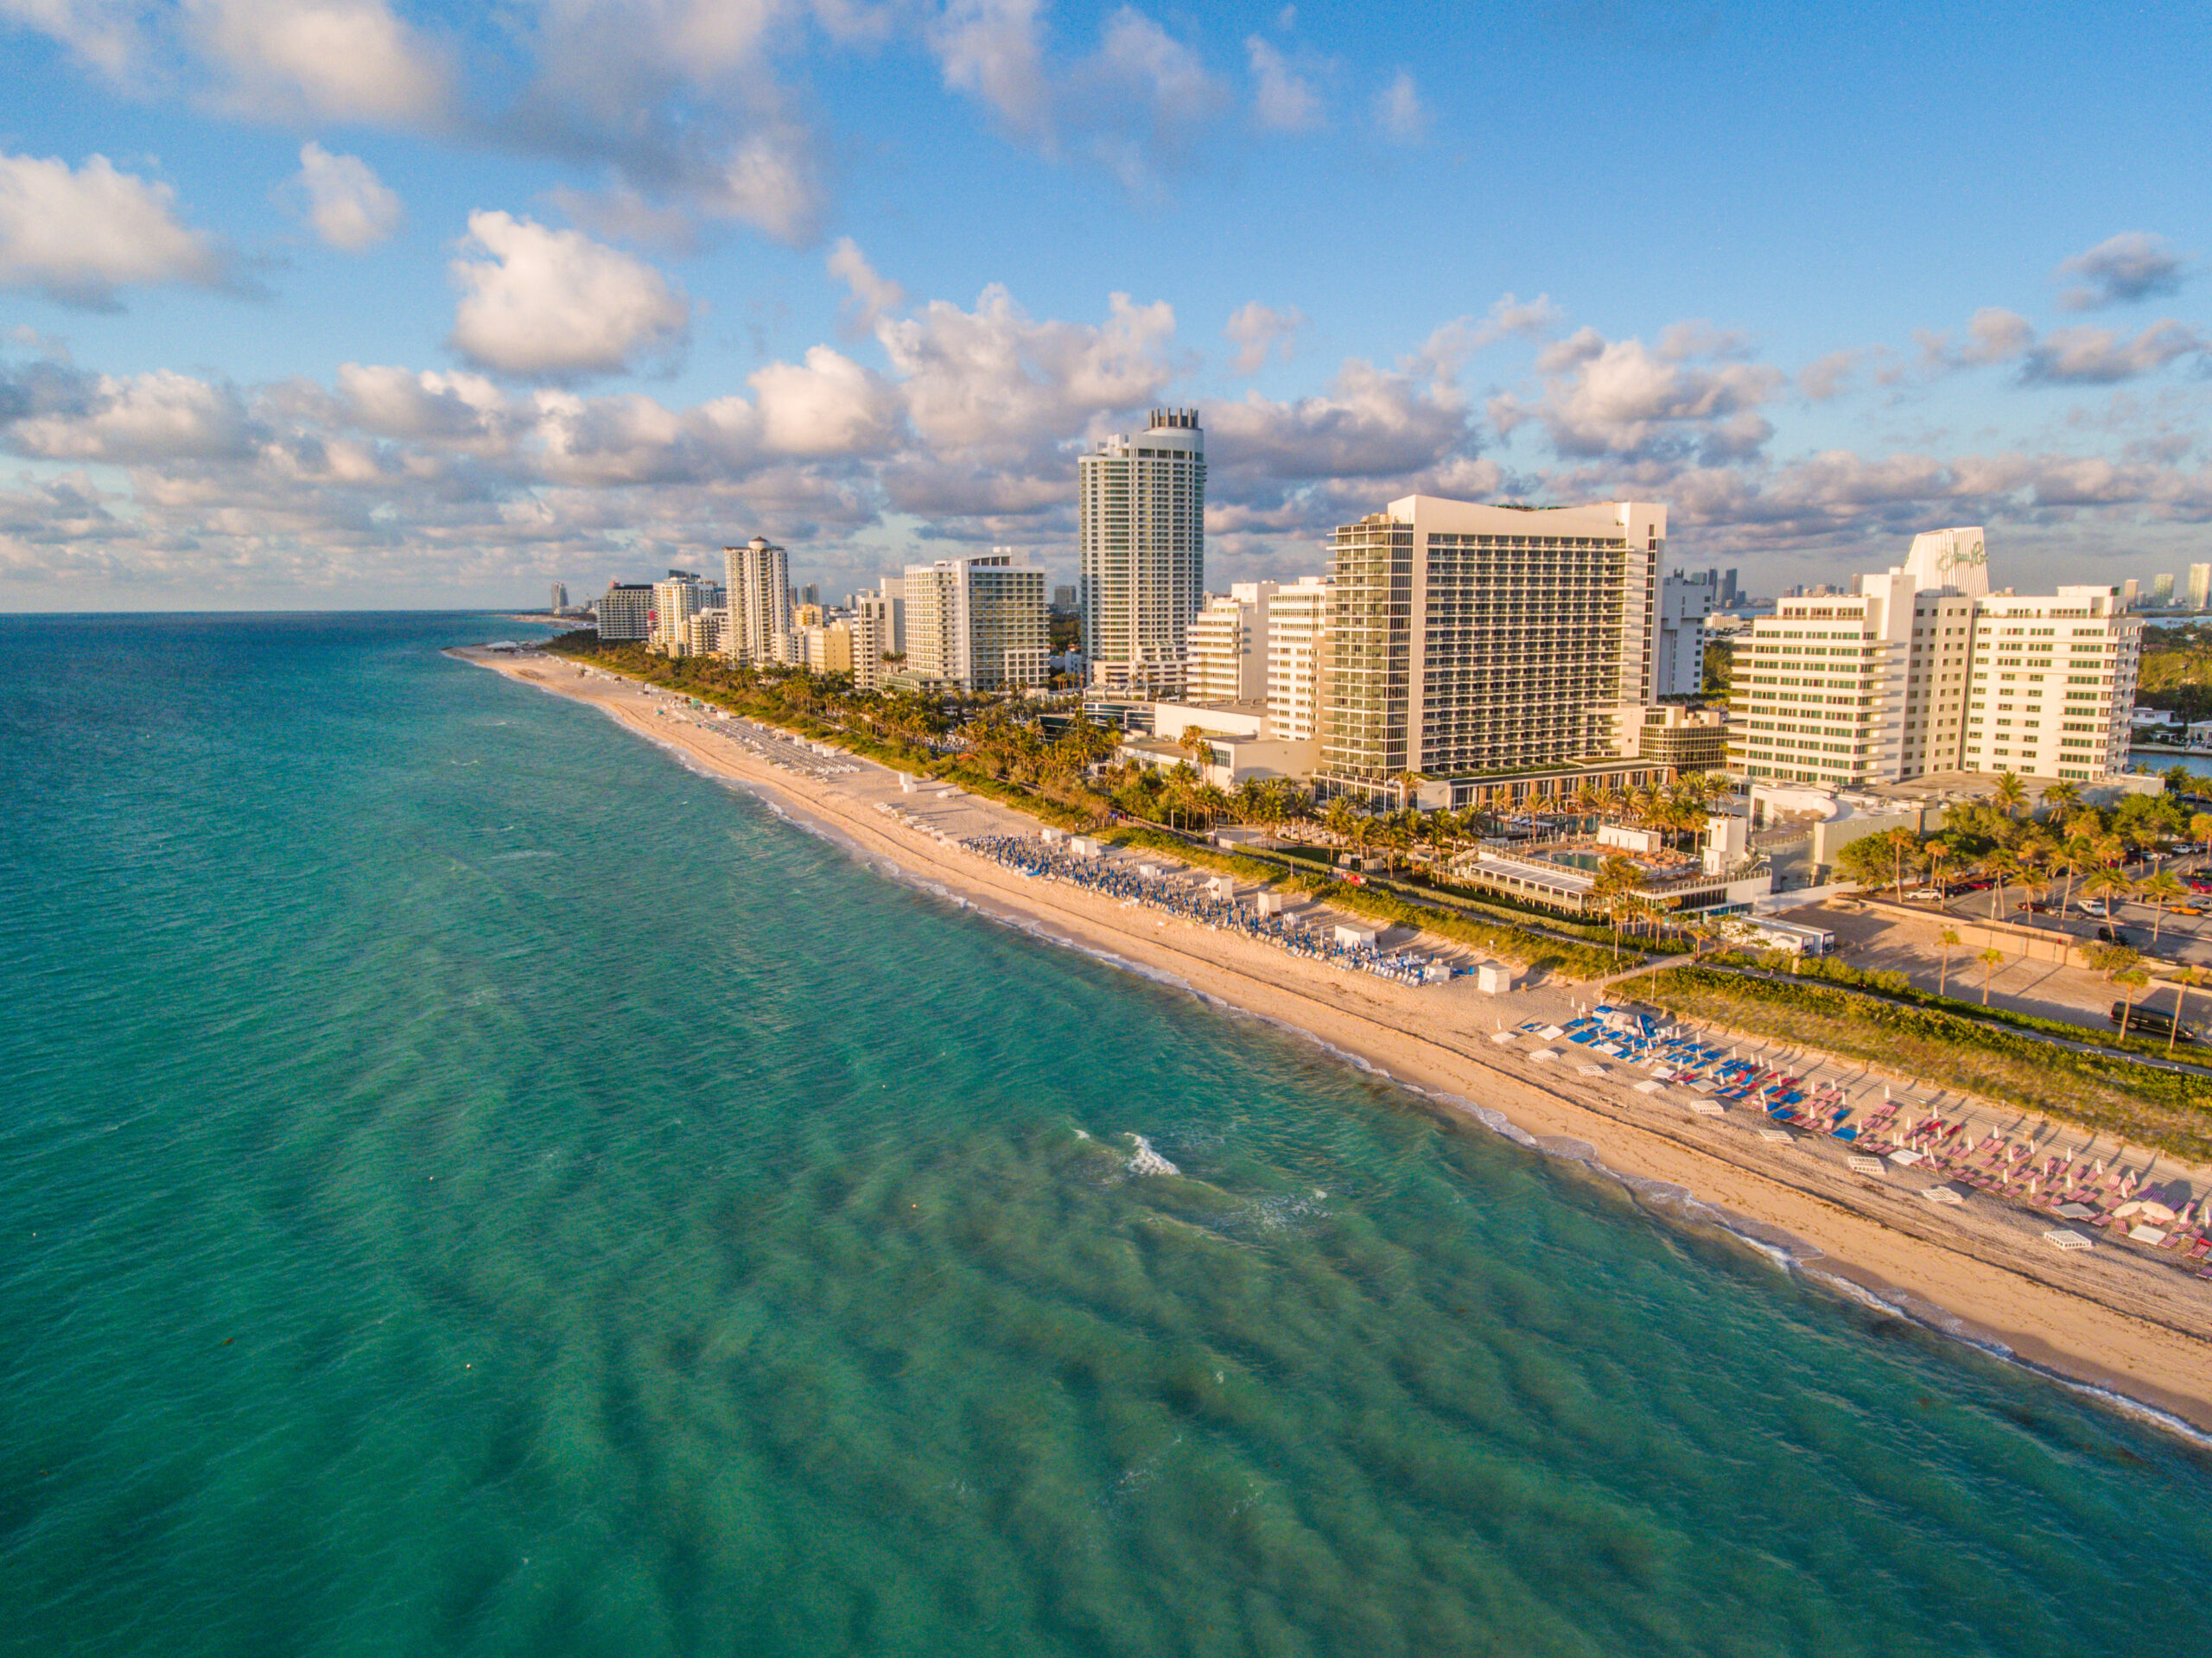 Aerial View Of Miami Beach Adam Goldberg Photography